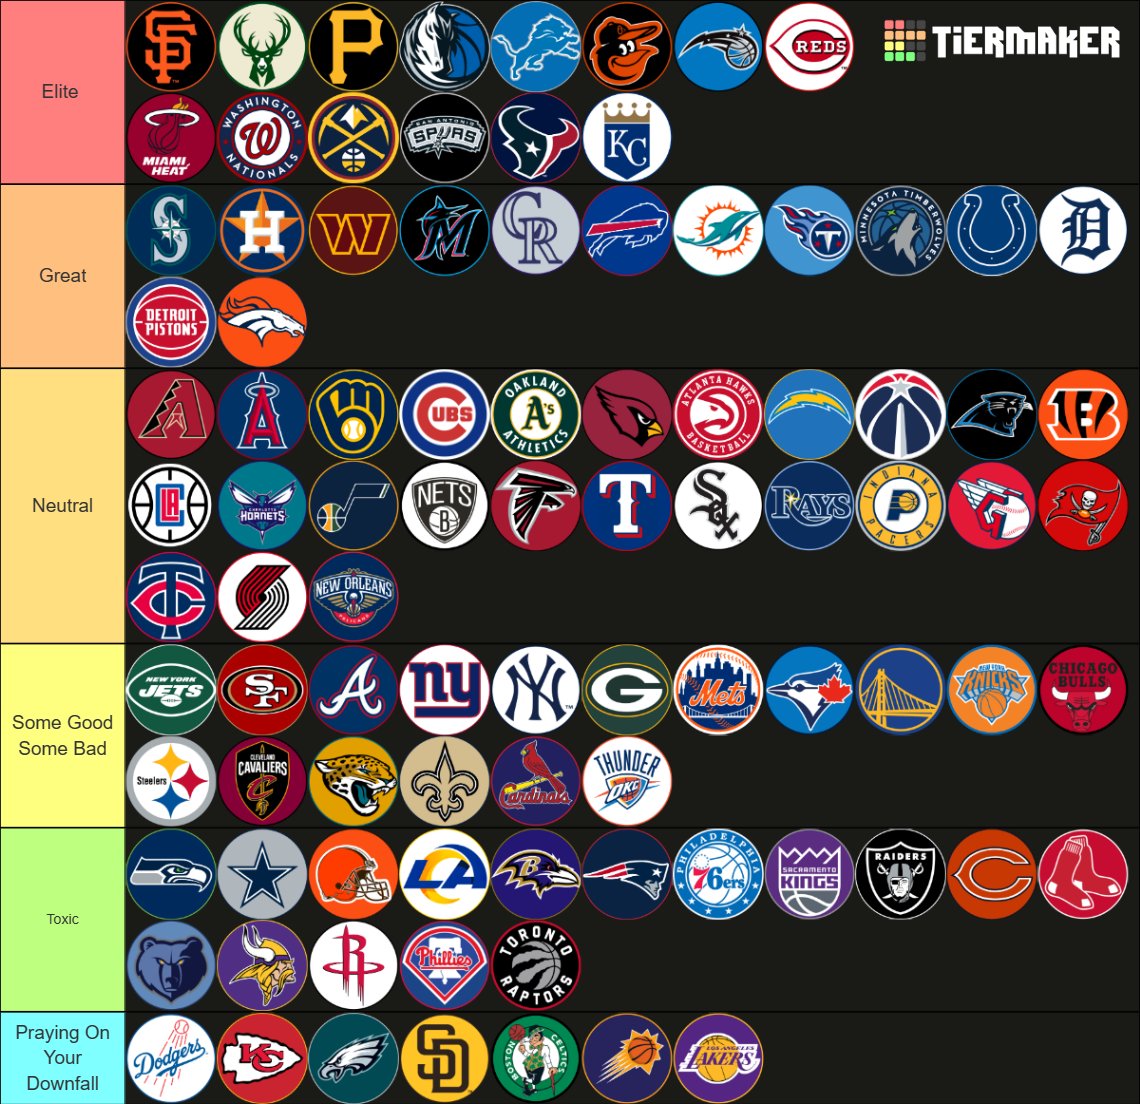 Ranking Fan Bases (MLB, NBA & NFL)